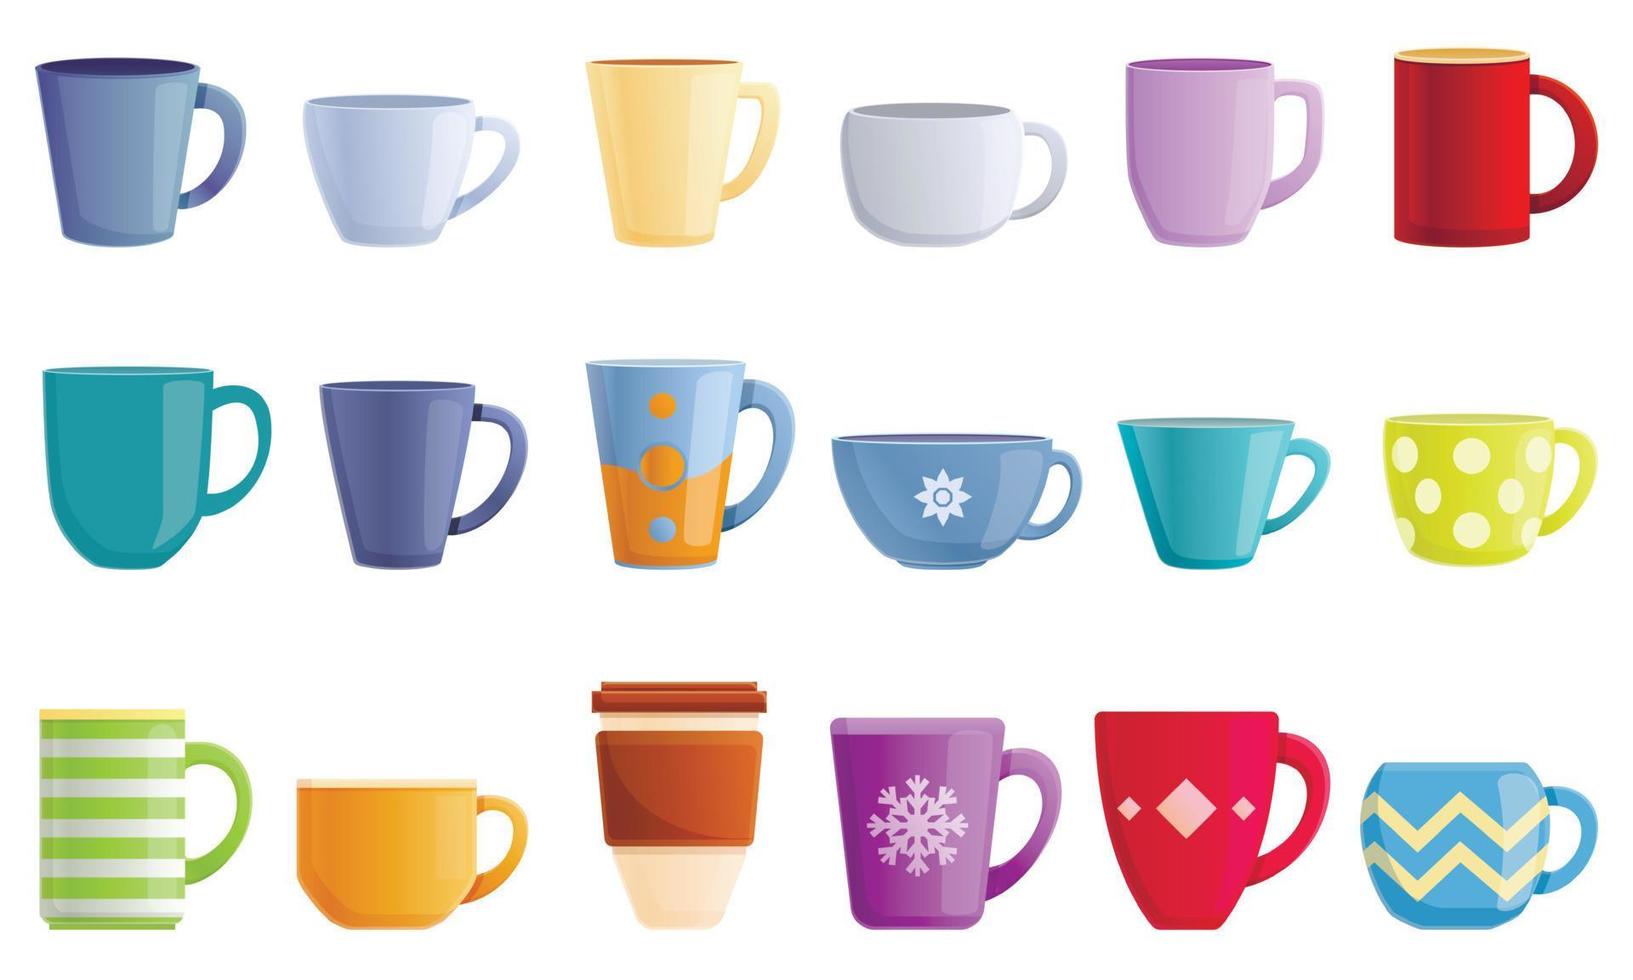 Mug icons set, cartoon style vector